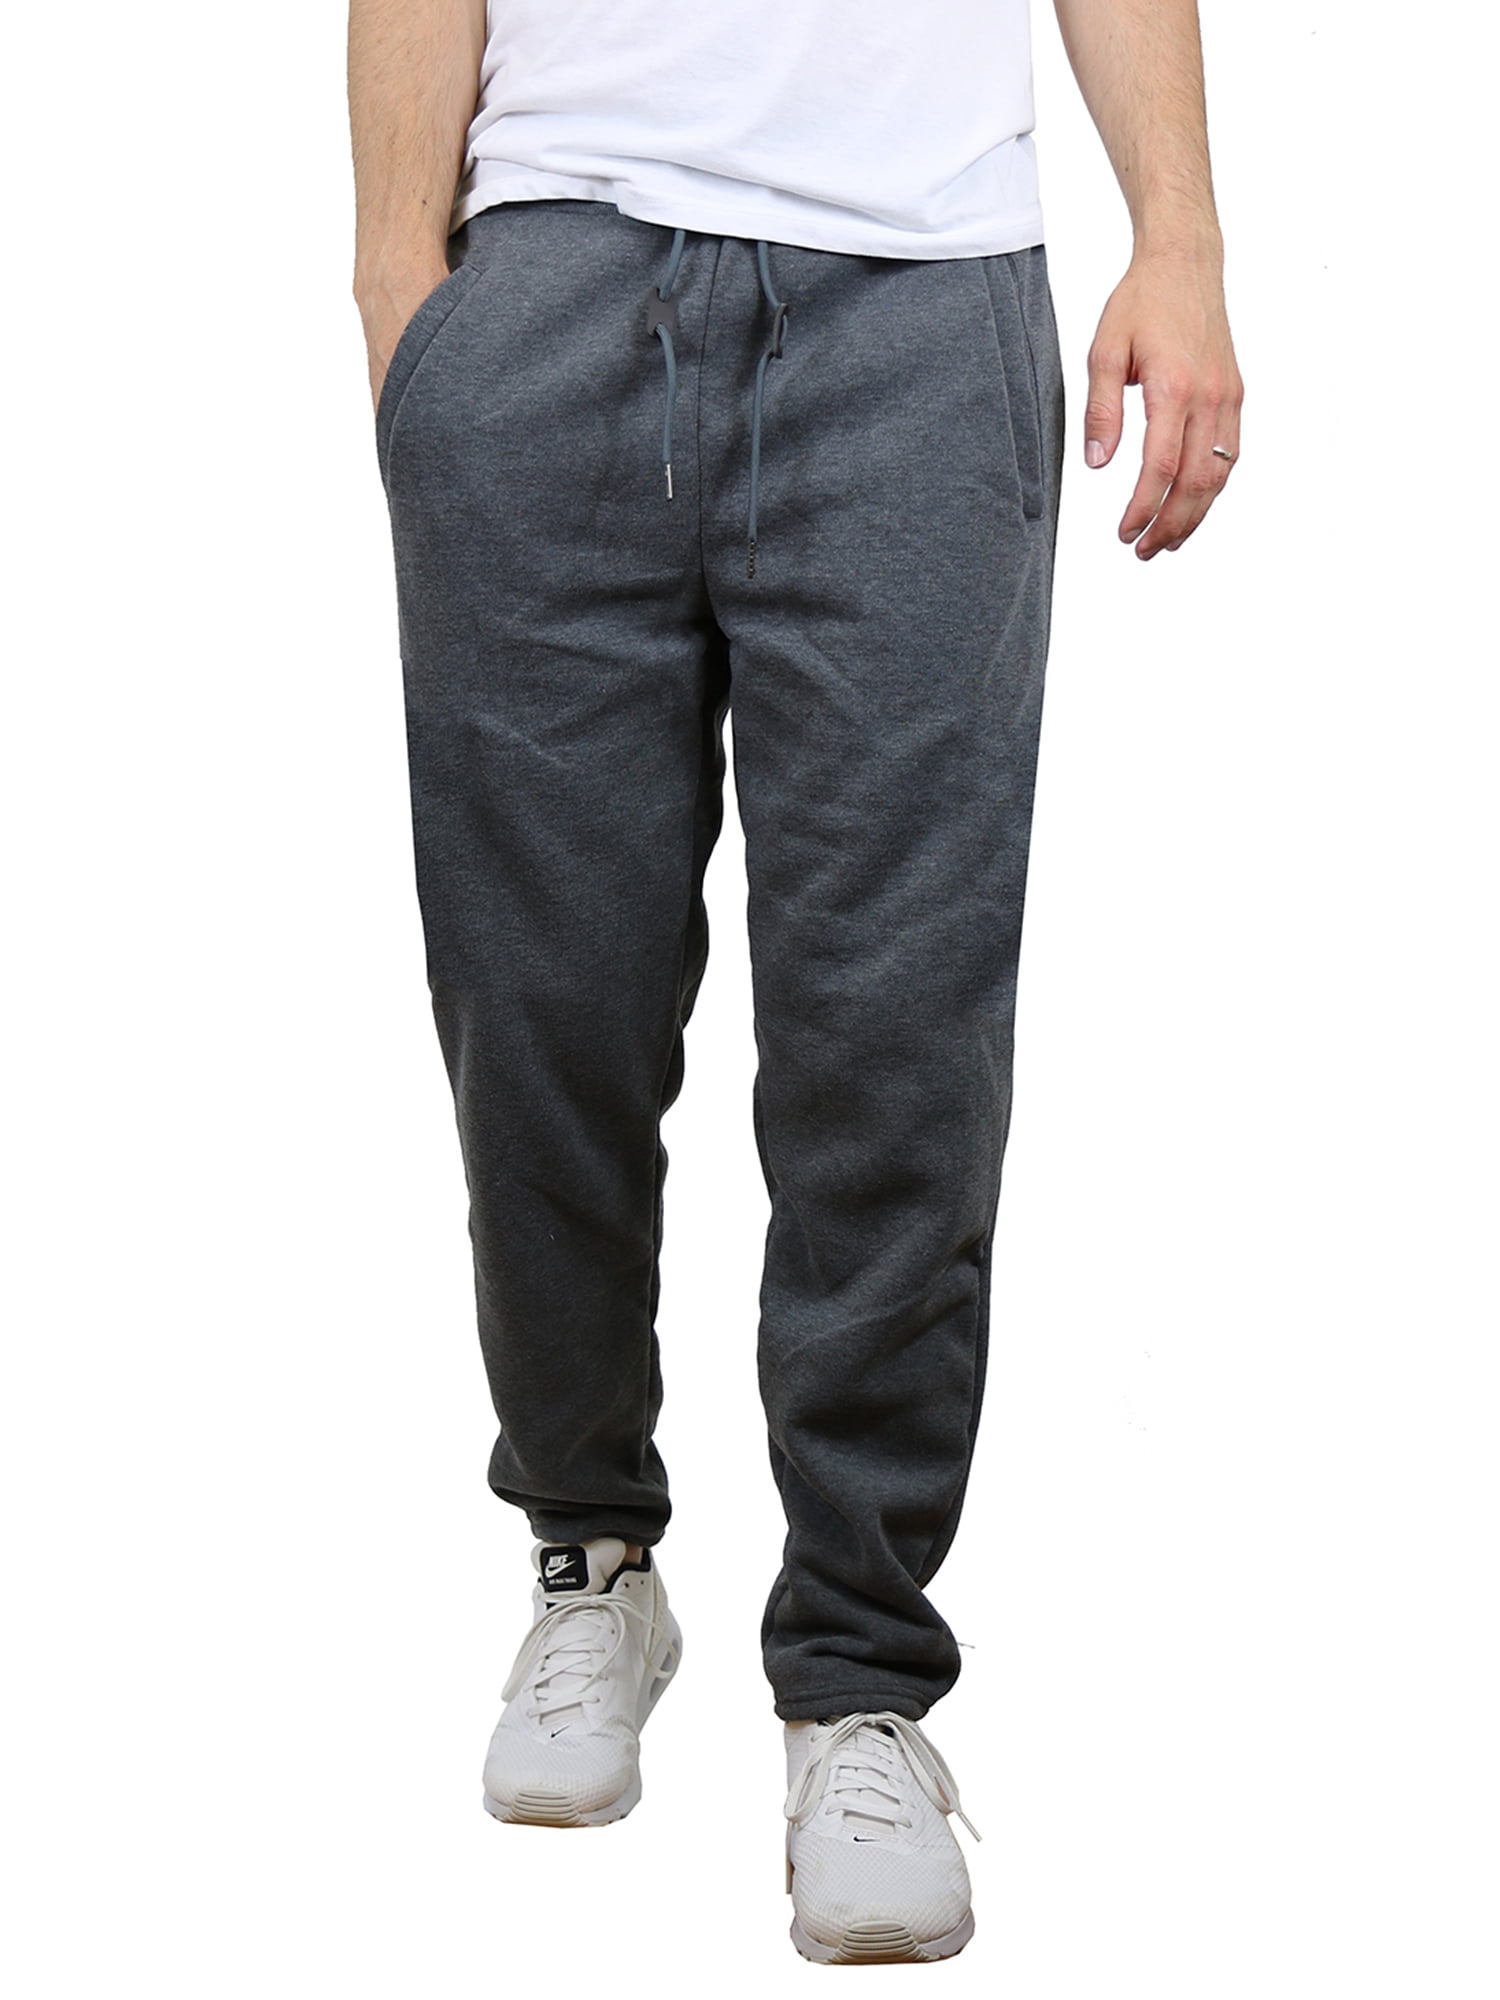 Men's Classic Open Bottom Fleece Sweatpants (Sizes, S-2XL) - Walmart.com